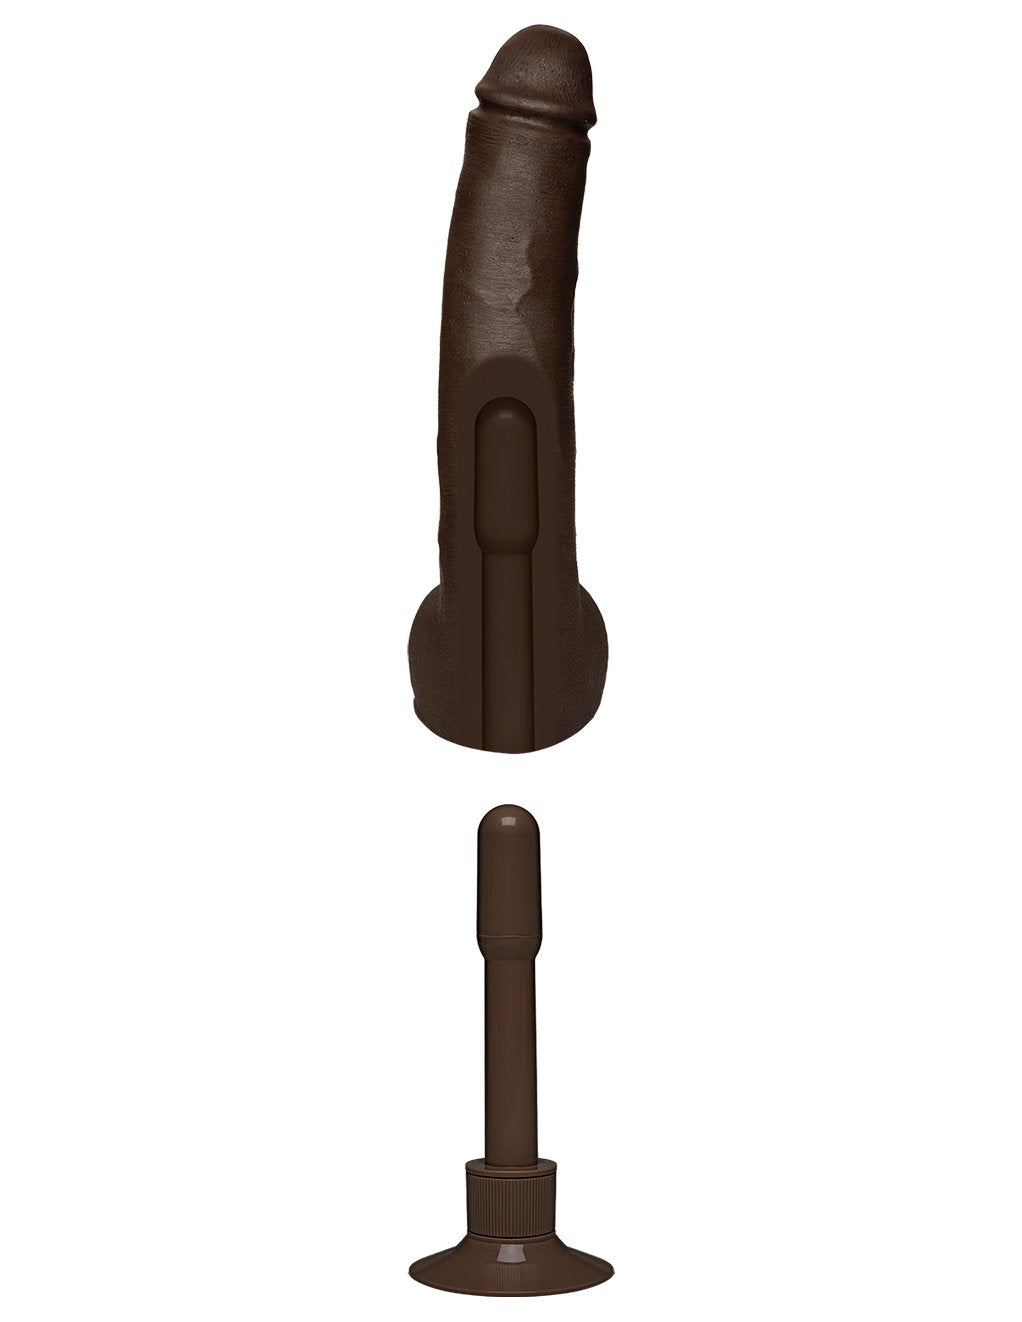 Safaree Samuels Anaconda Vibrating 12 inch UltraSkyn Cock- Brown- Vibrator Detail- Top